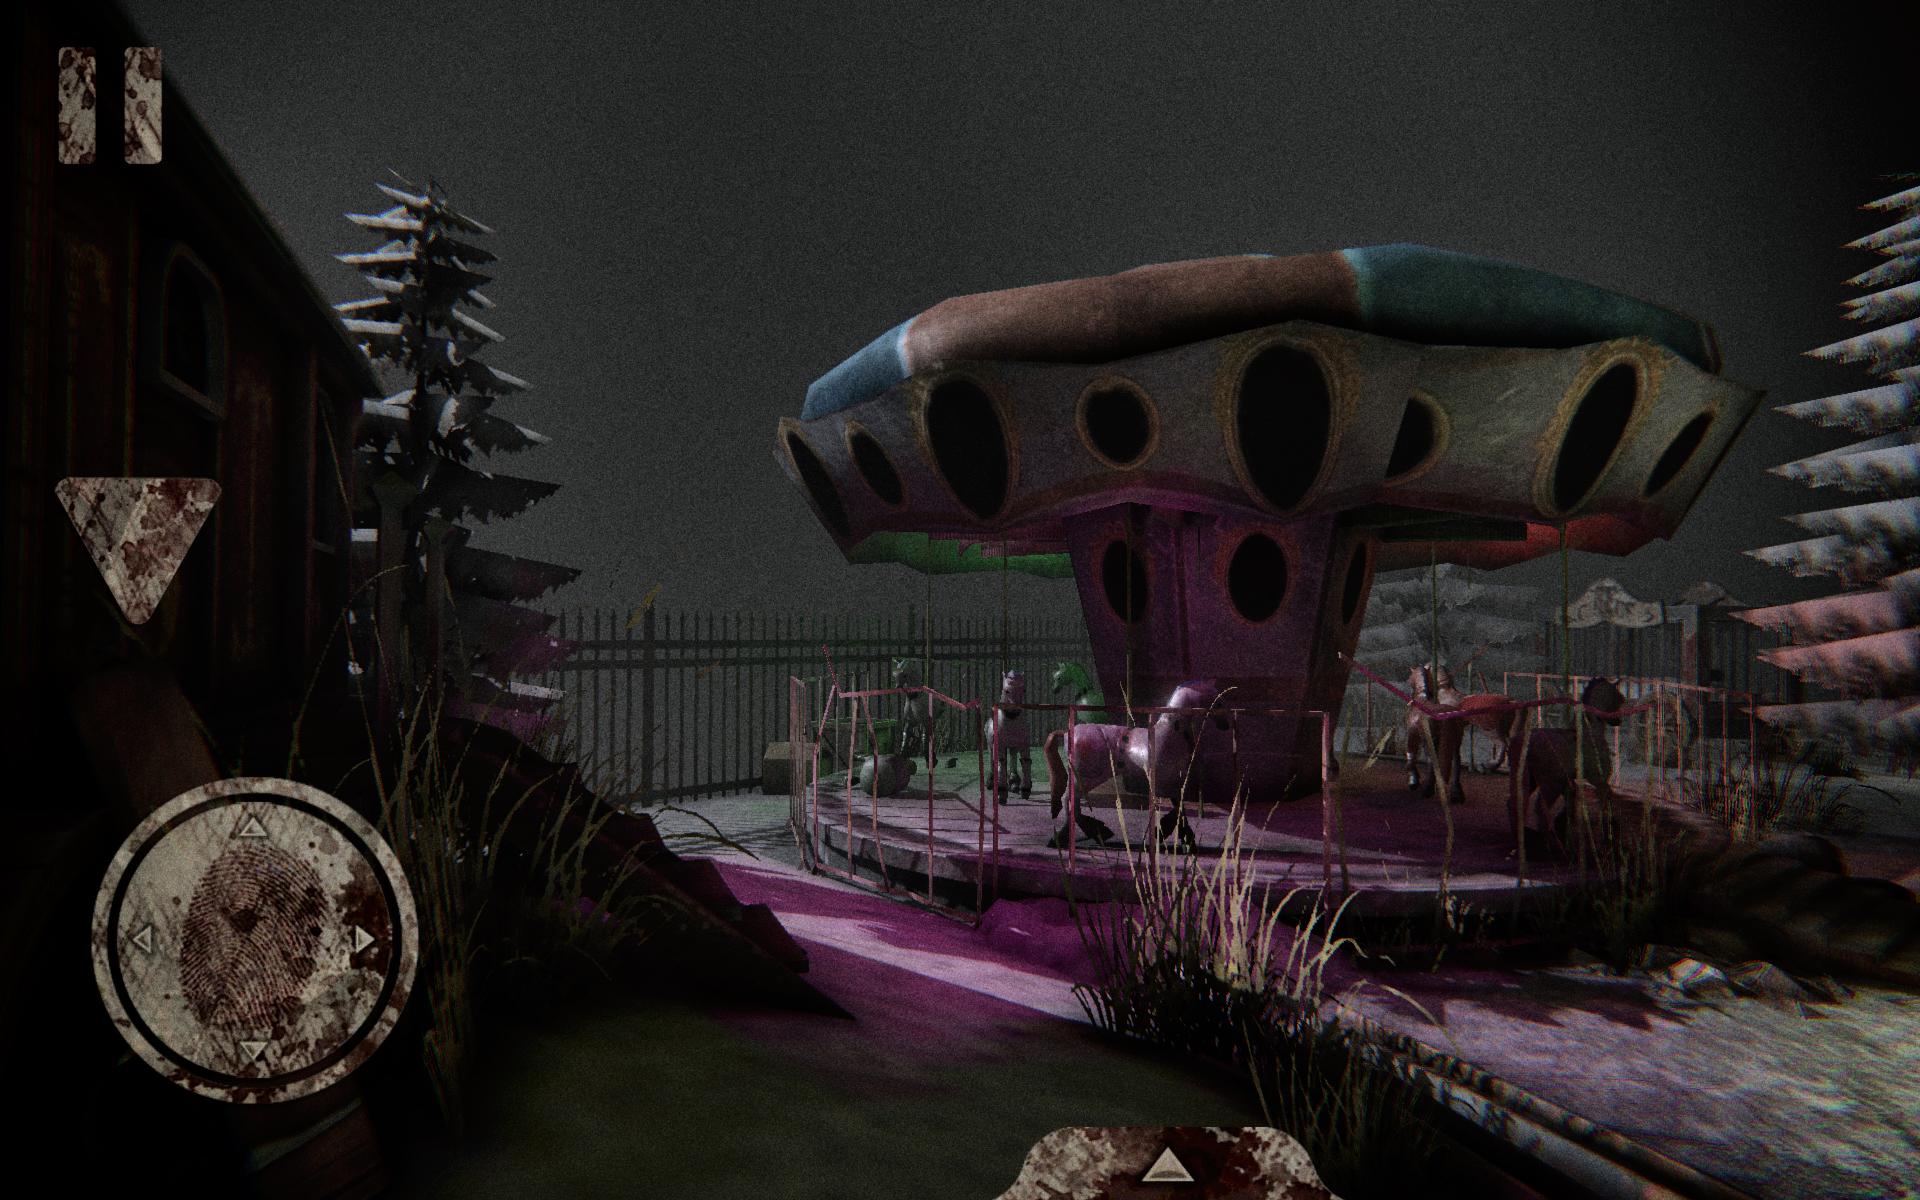 Death Park Scary Clown Survival Horror Game 1.6.0 Screenshot 20